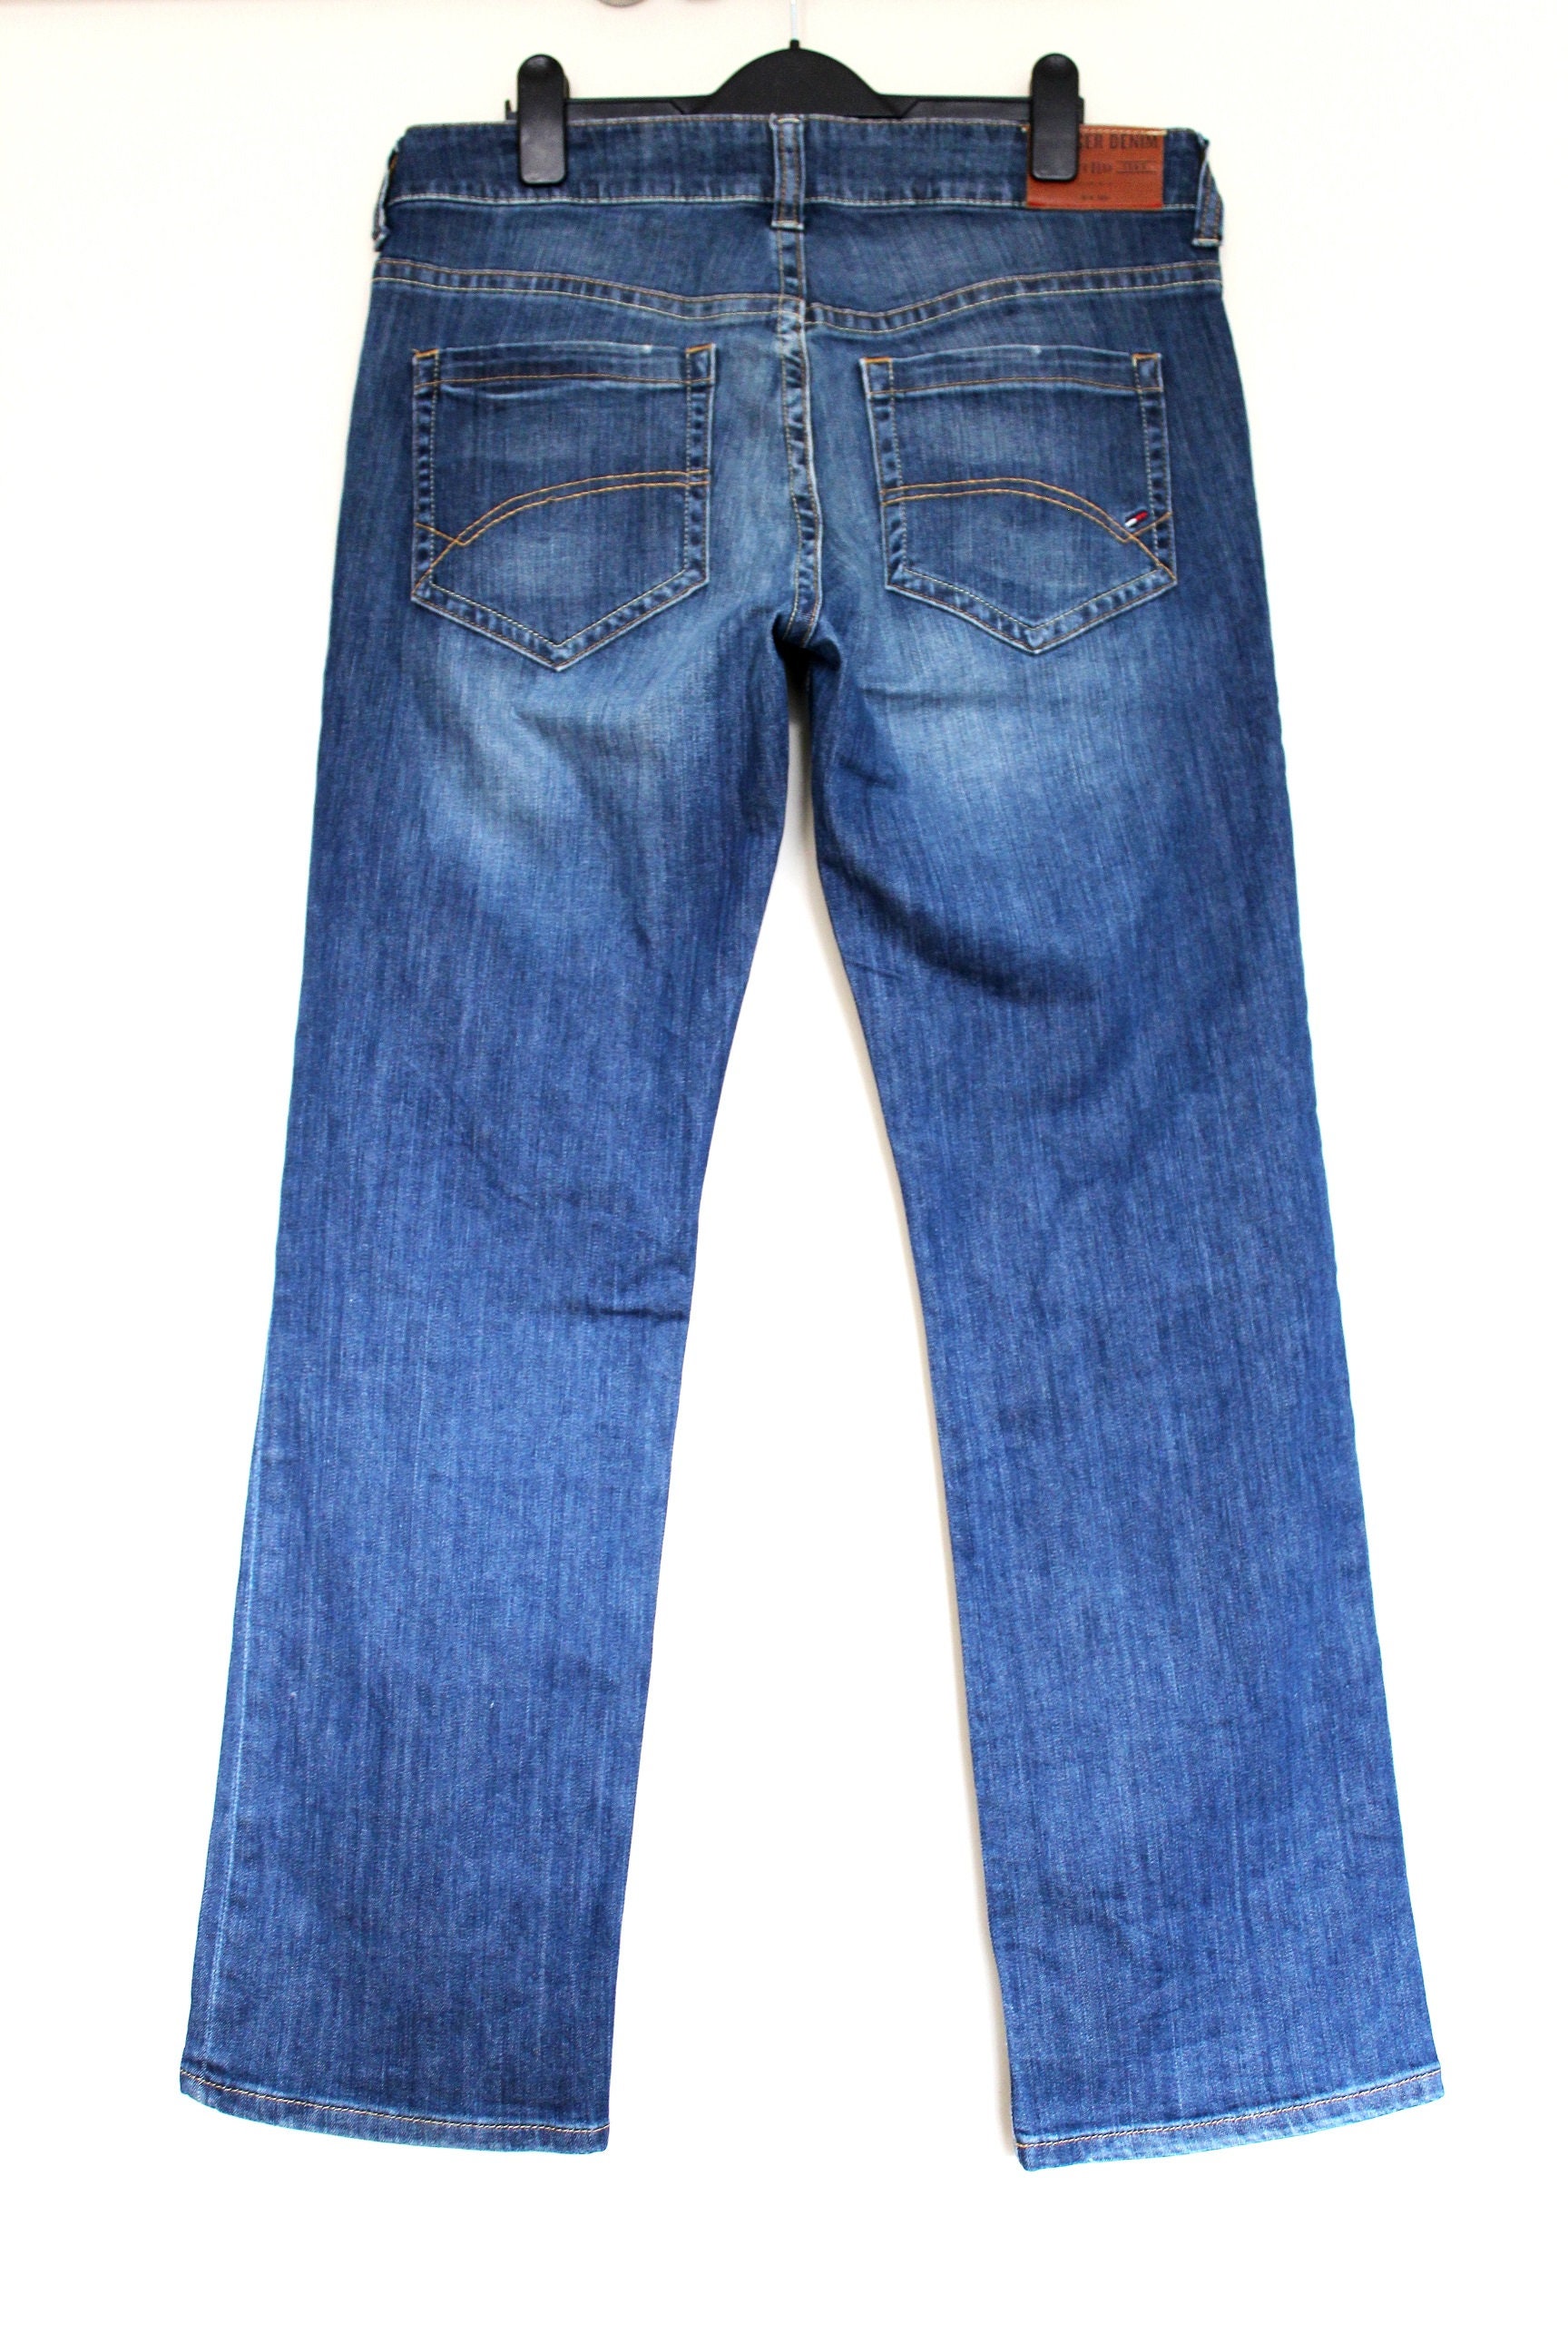 Ripped Vintage TOMMY HILFIGER Jeans Blue Denim Pants | Etsy